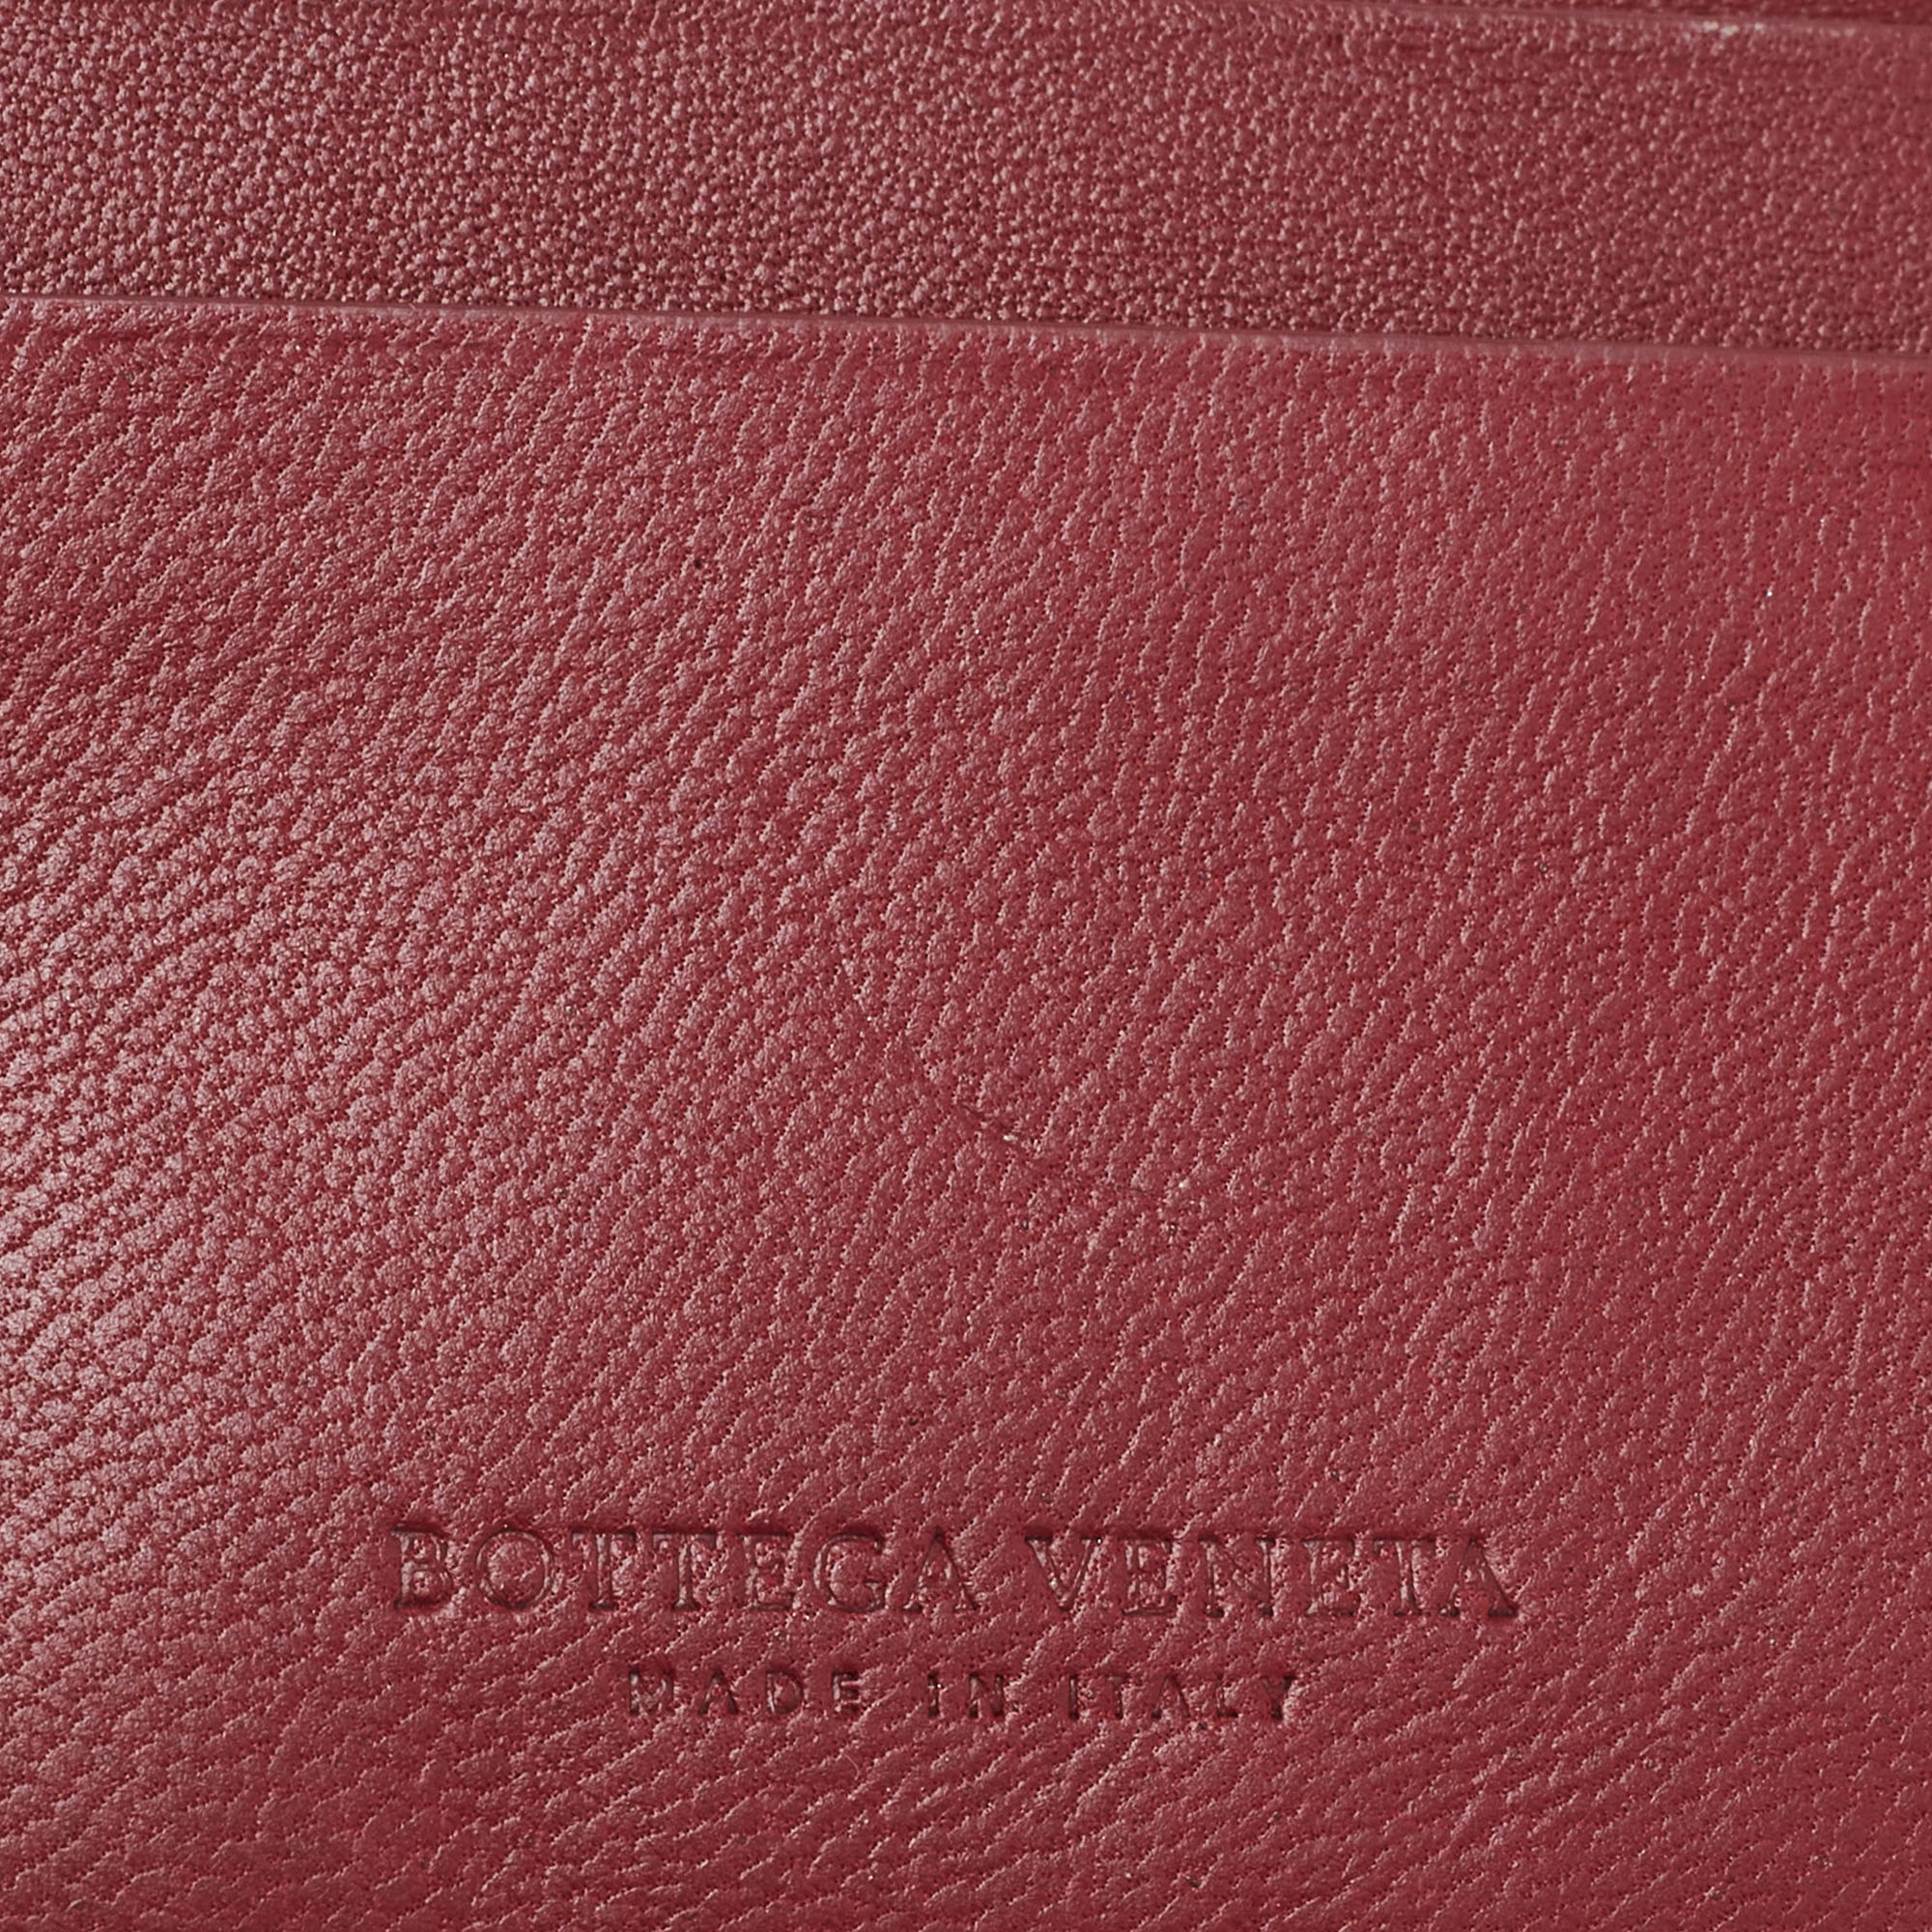 Bottega Veneta Burgundy Leather Card Holder